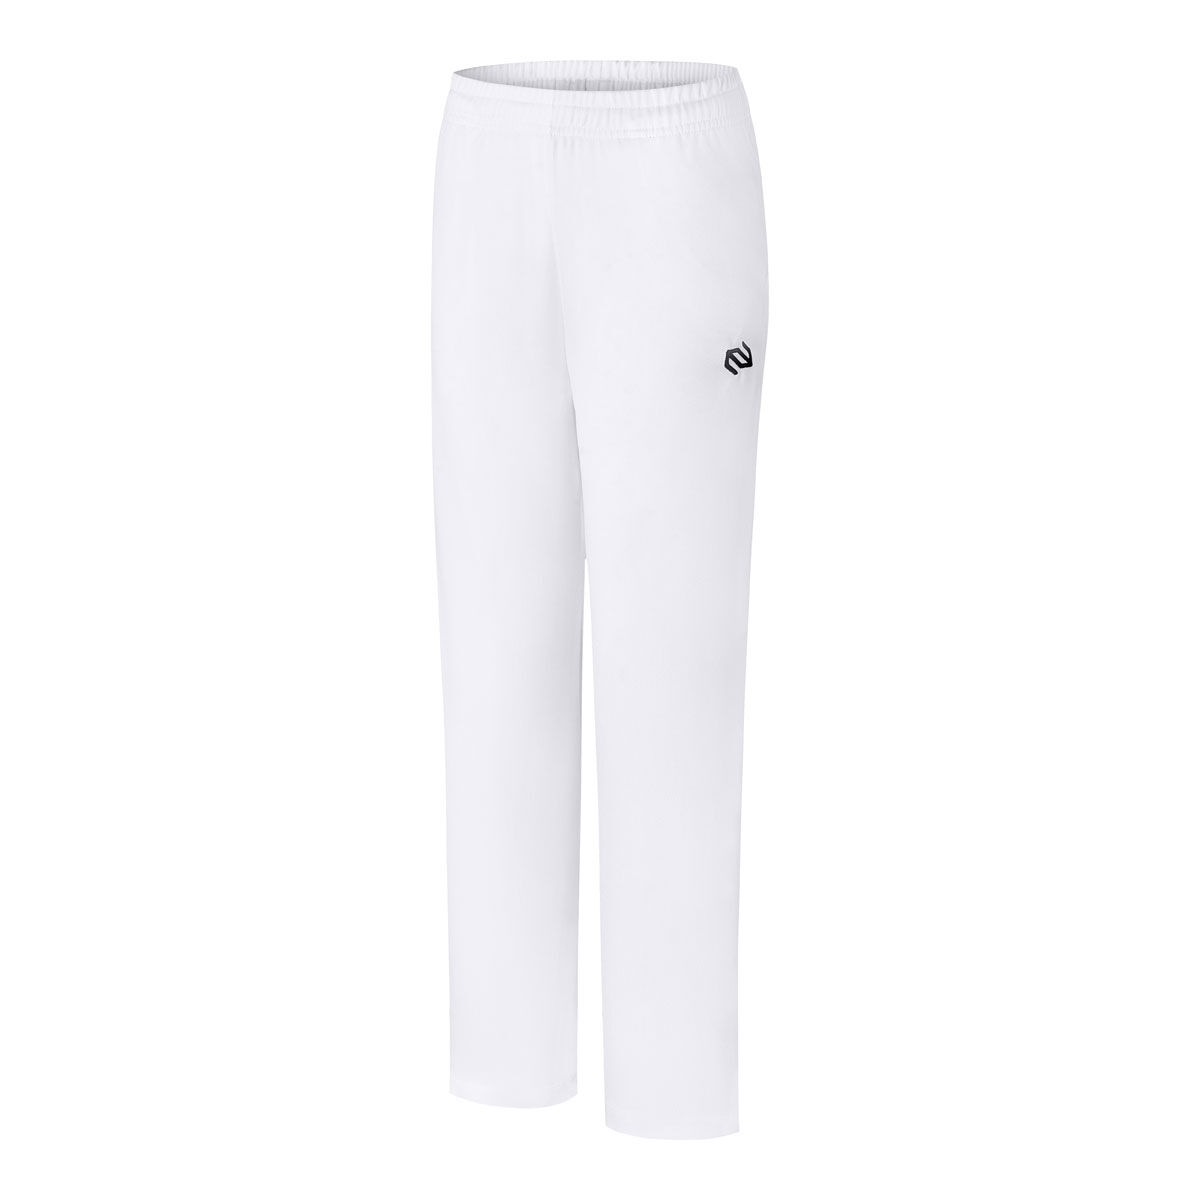 My Sports Jersey  White Cricket Pants Cricket whites